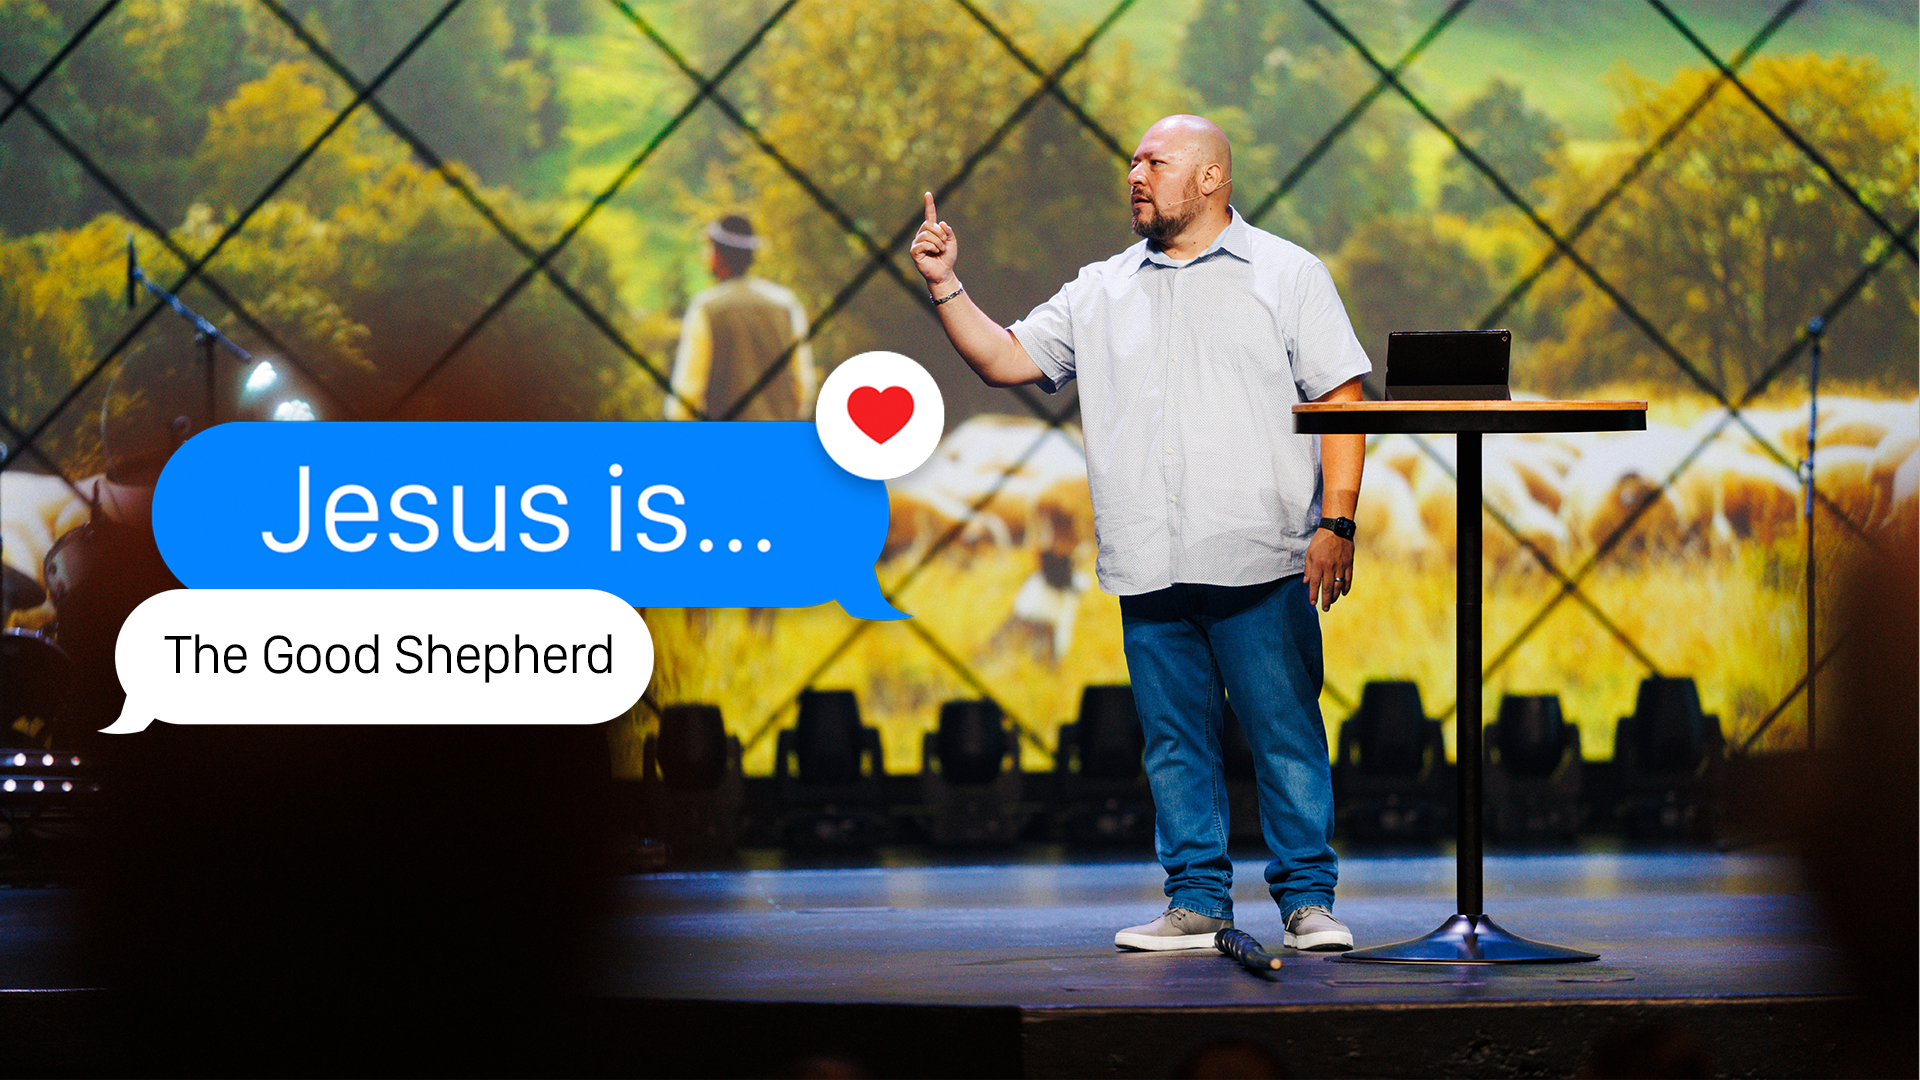 Image: Jesus is… The Good Shepherd